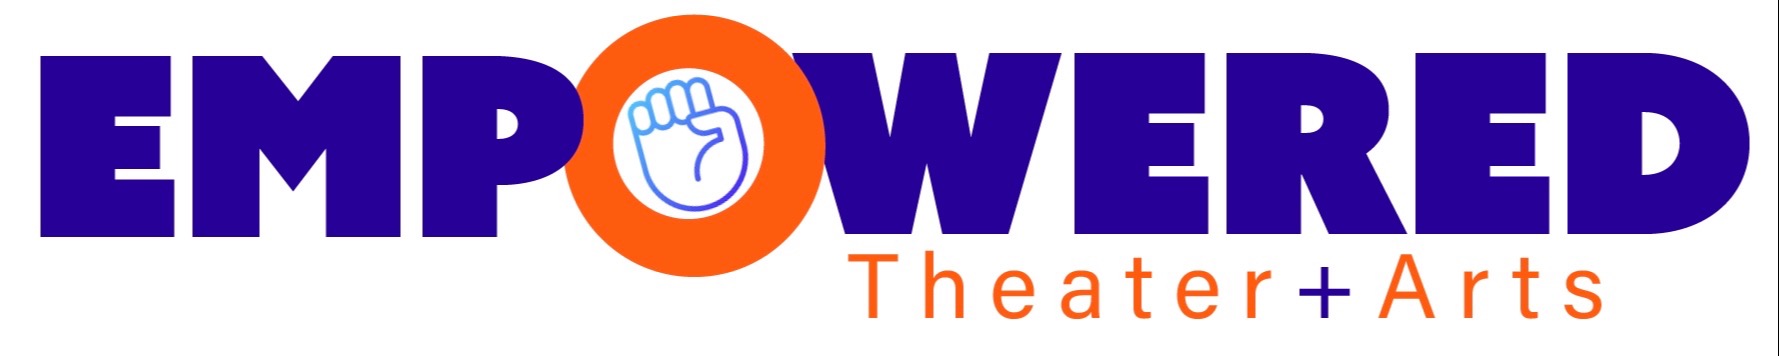 Empowered Theater & Arts logo